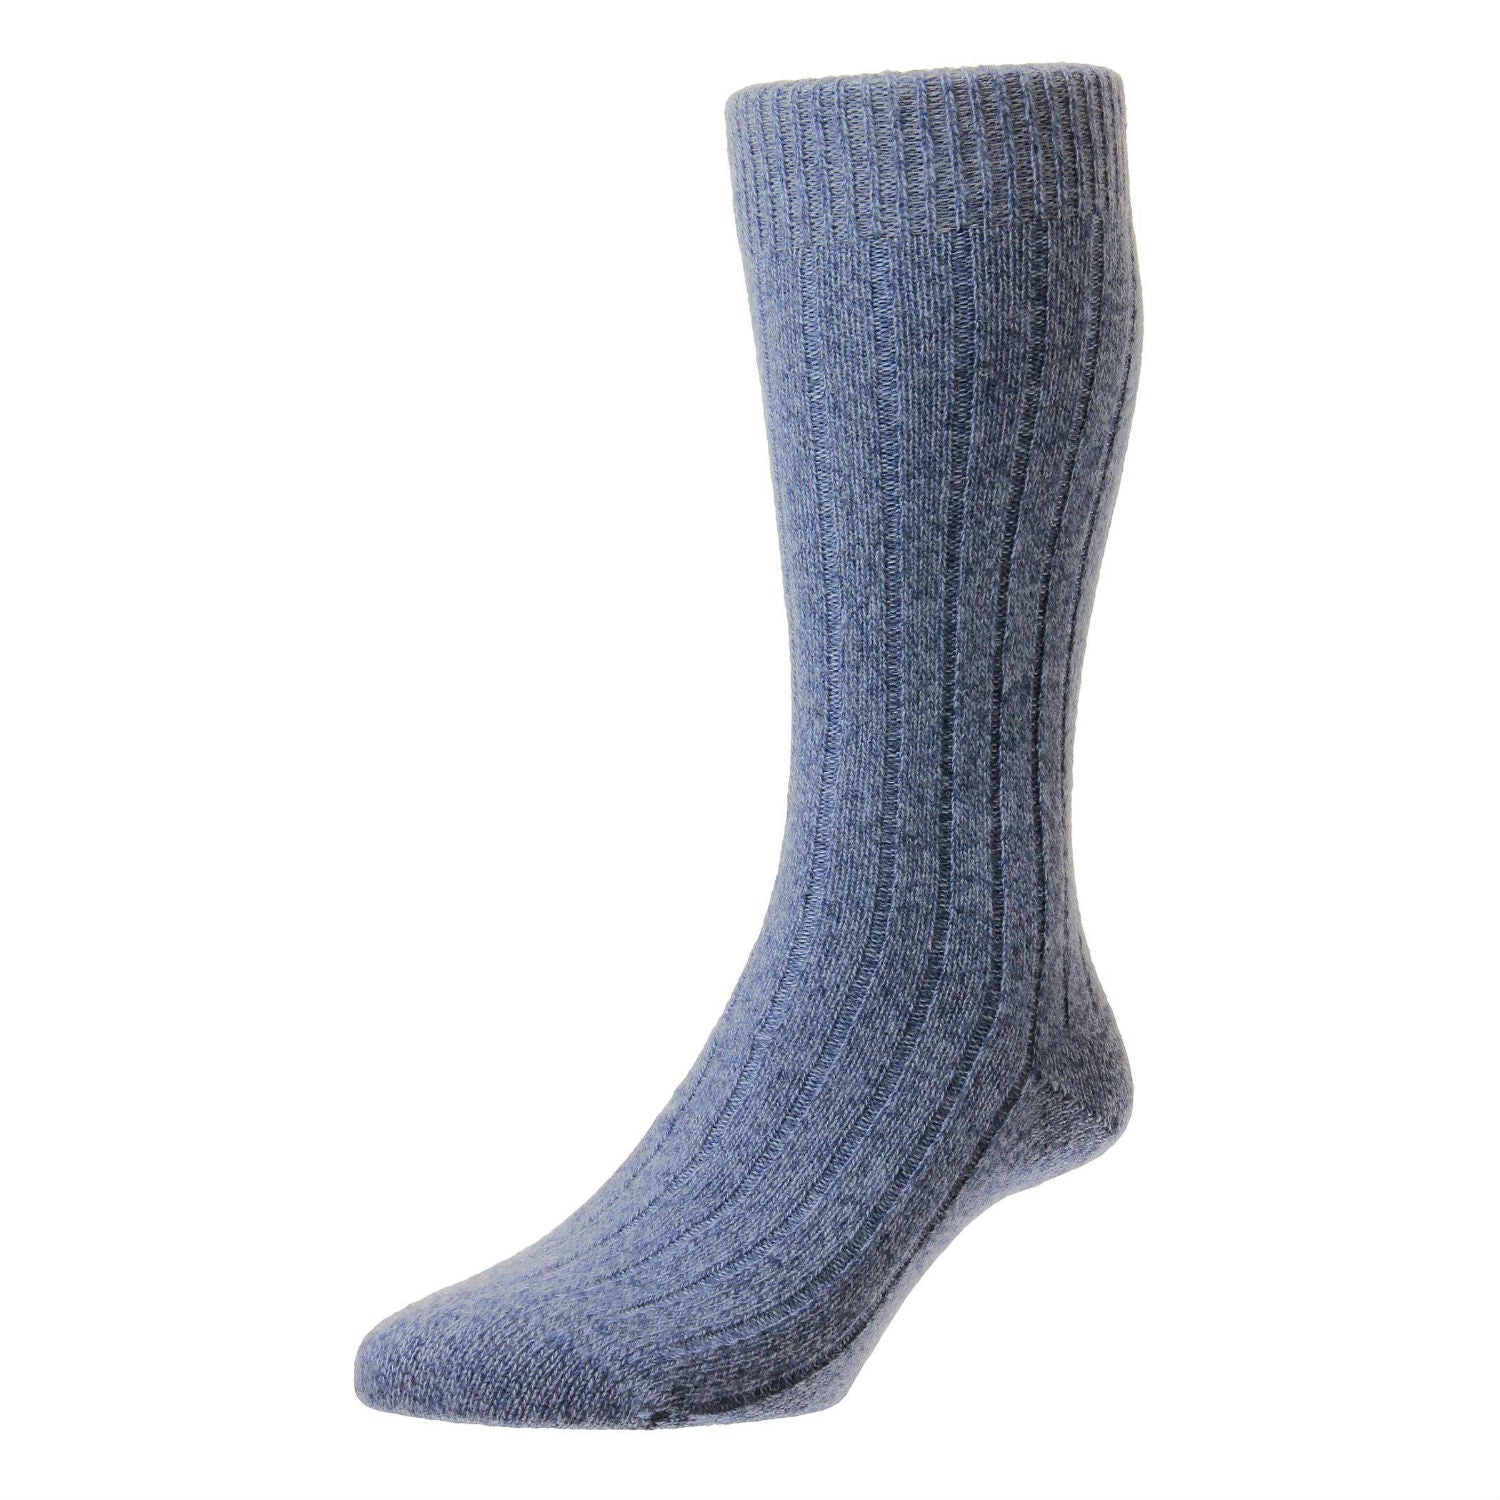 Cashmere Socks - The Cashmere Choice